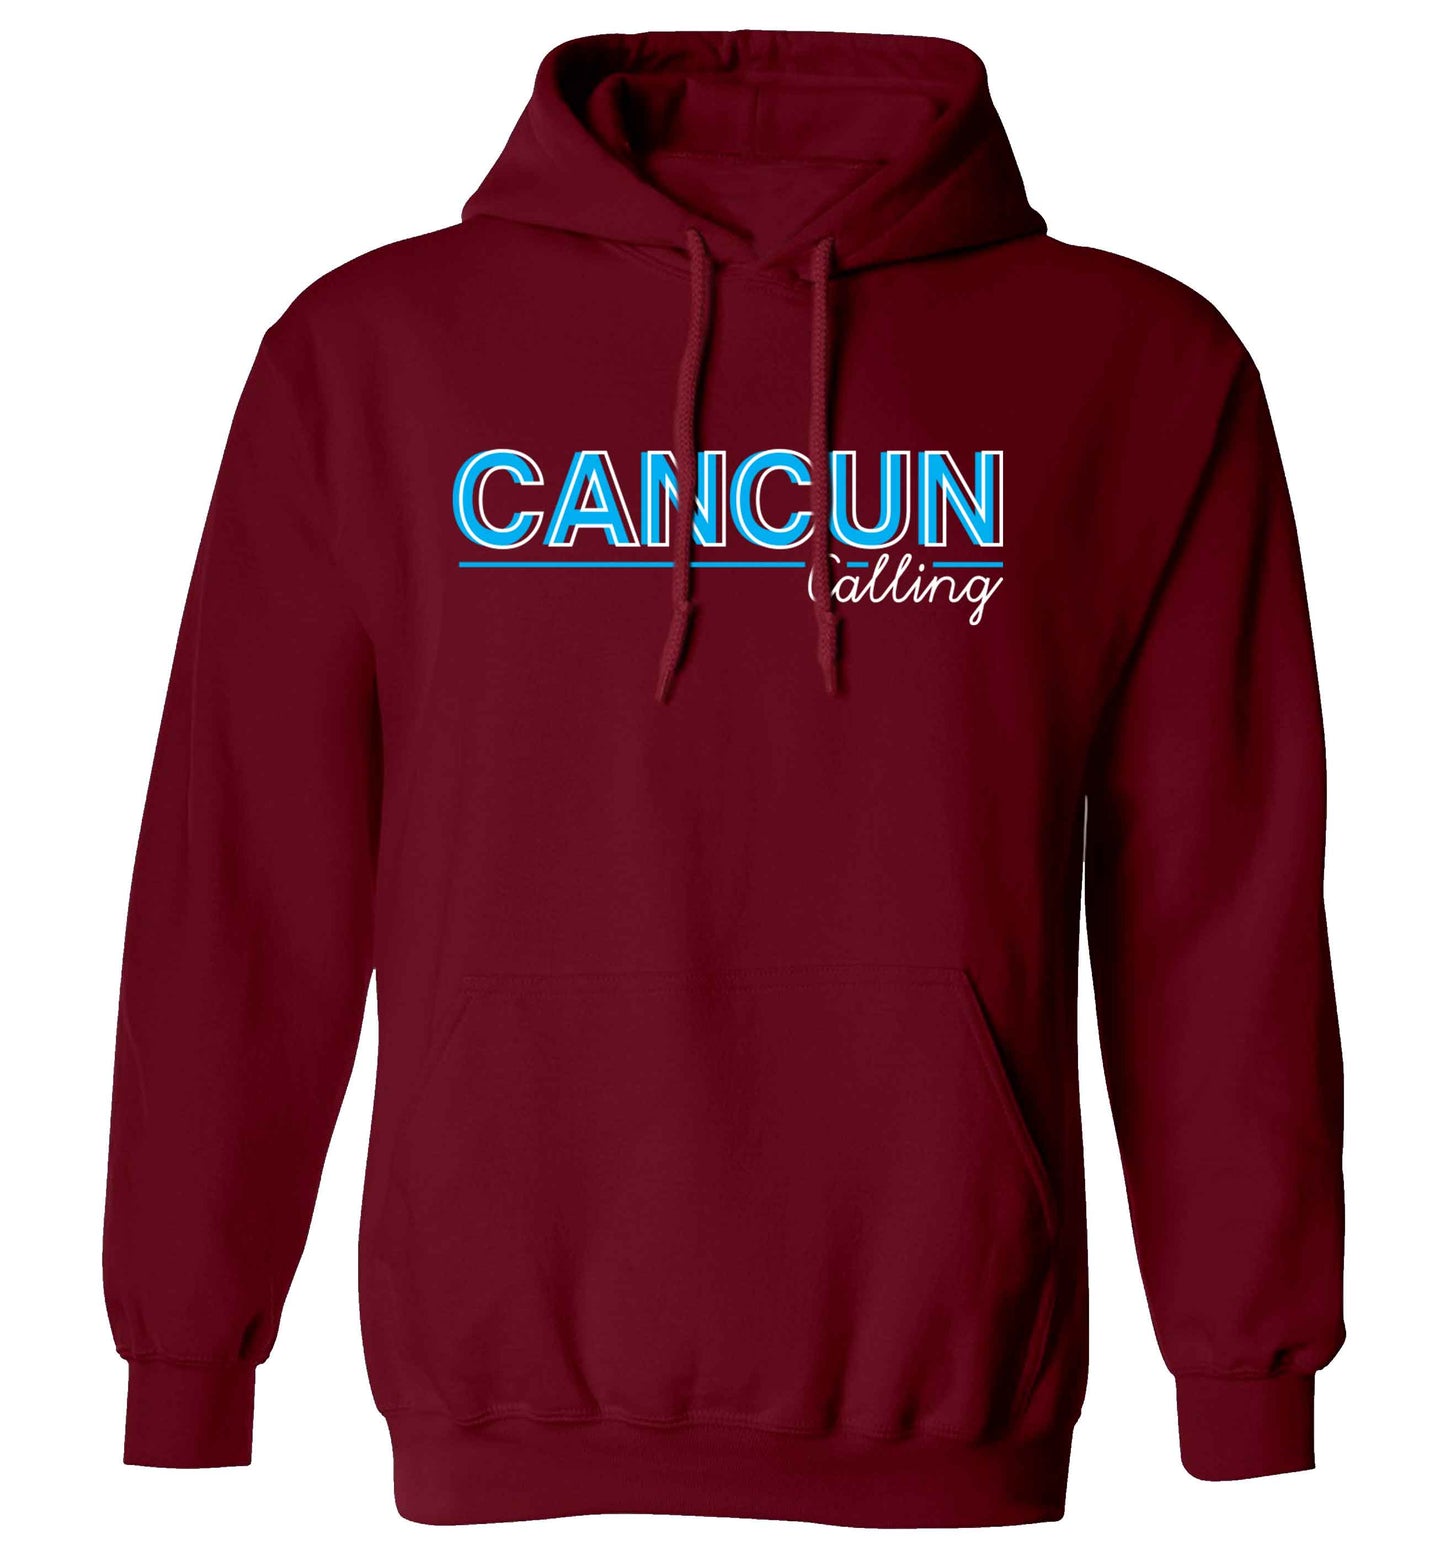 Cancun calling adults unisex maroon hoodie 2XL